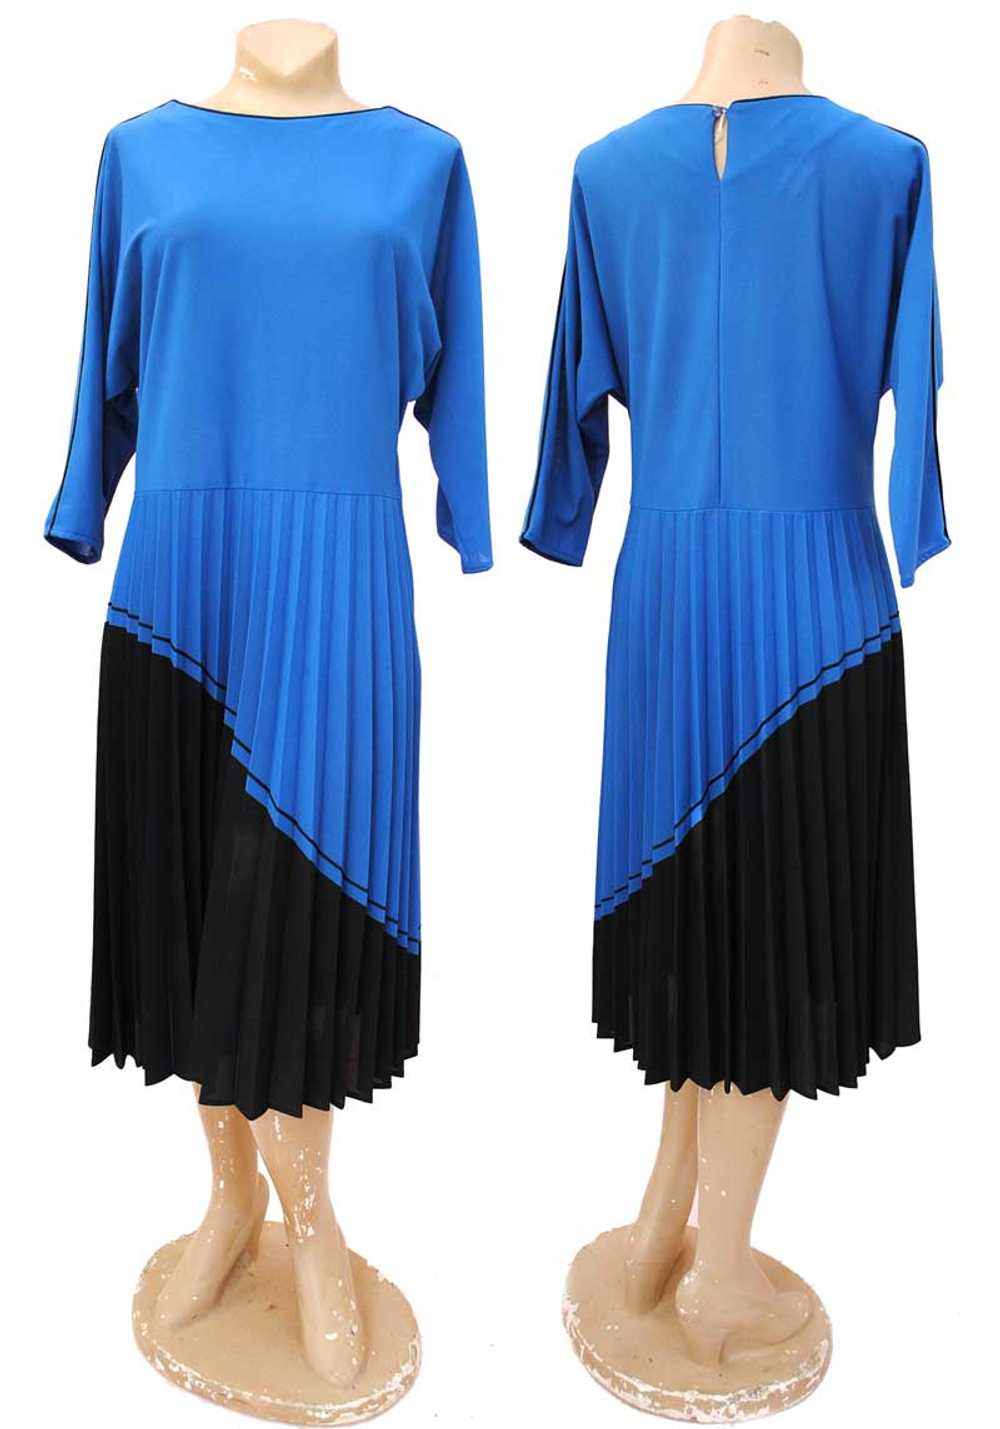 1980s Vintage Blue and Black Pleated Dress - image 1